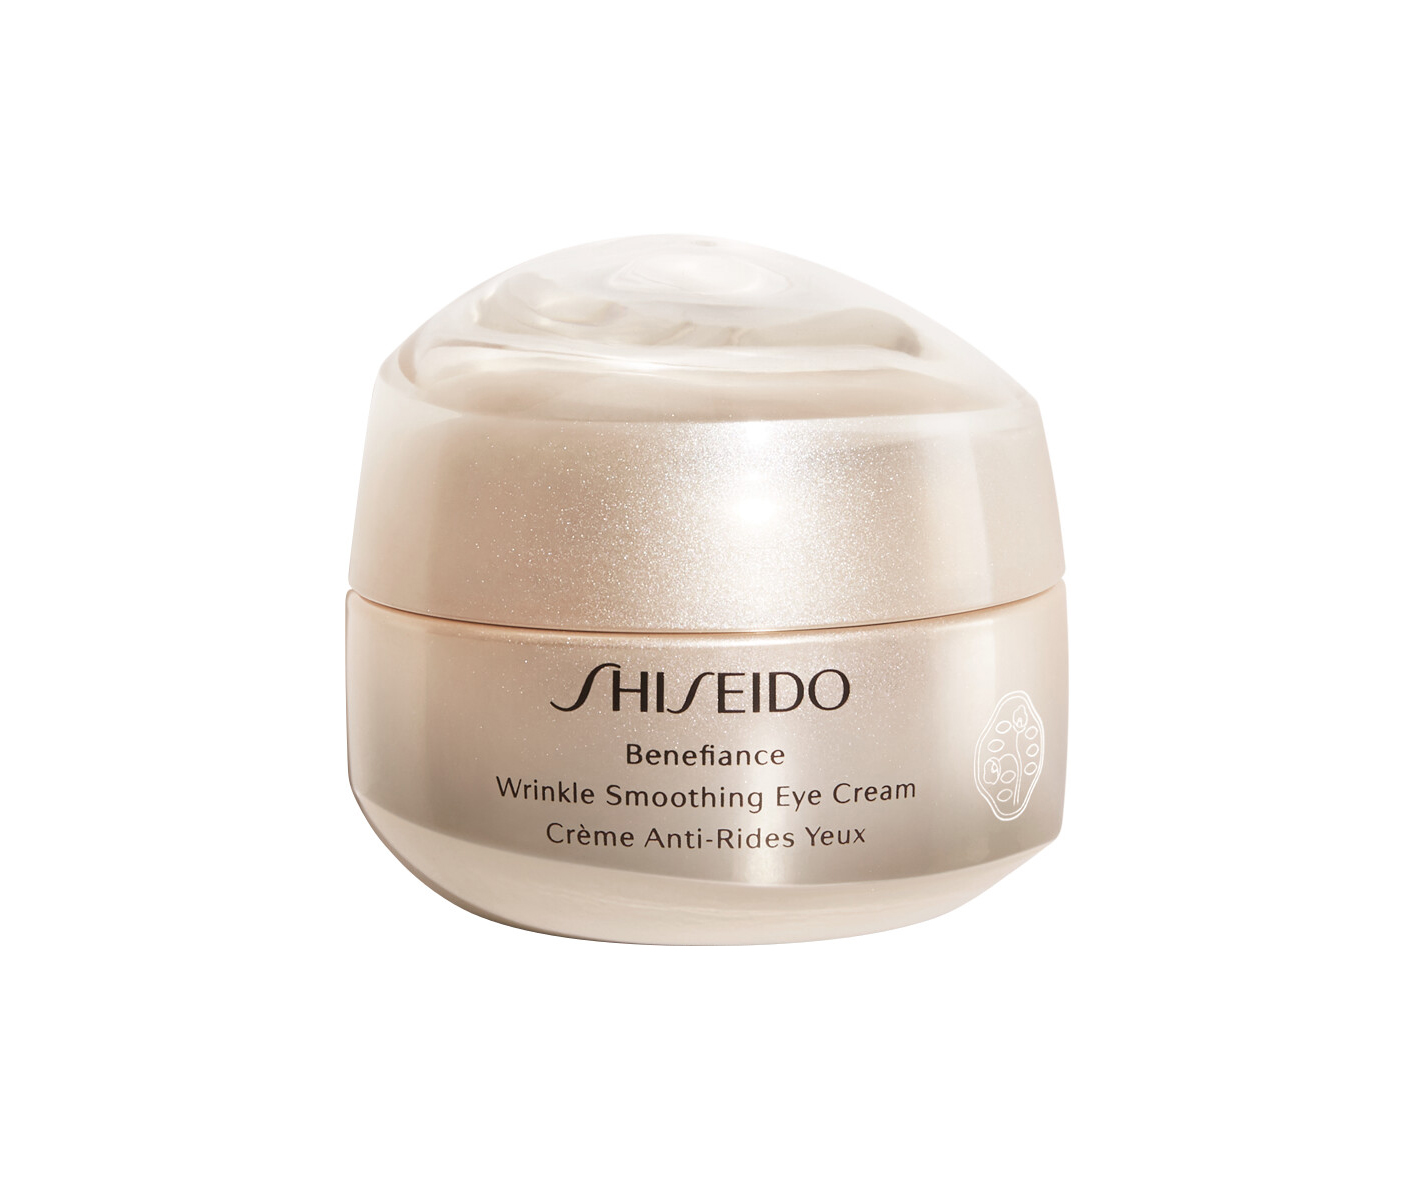 Shiseido, Benefiance Wrinkle Smoothing Eye Cream, Krem na zmarszczki pod oczami